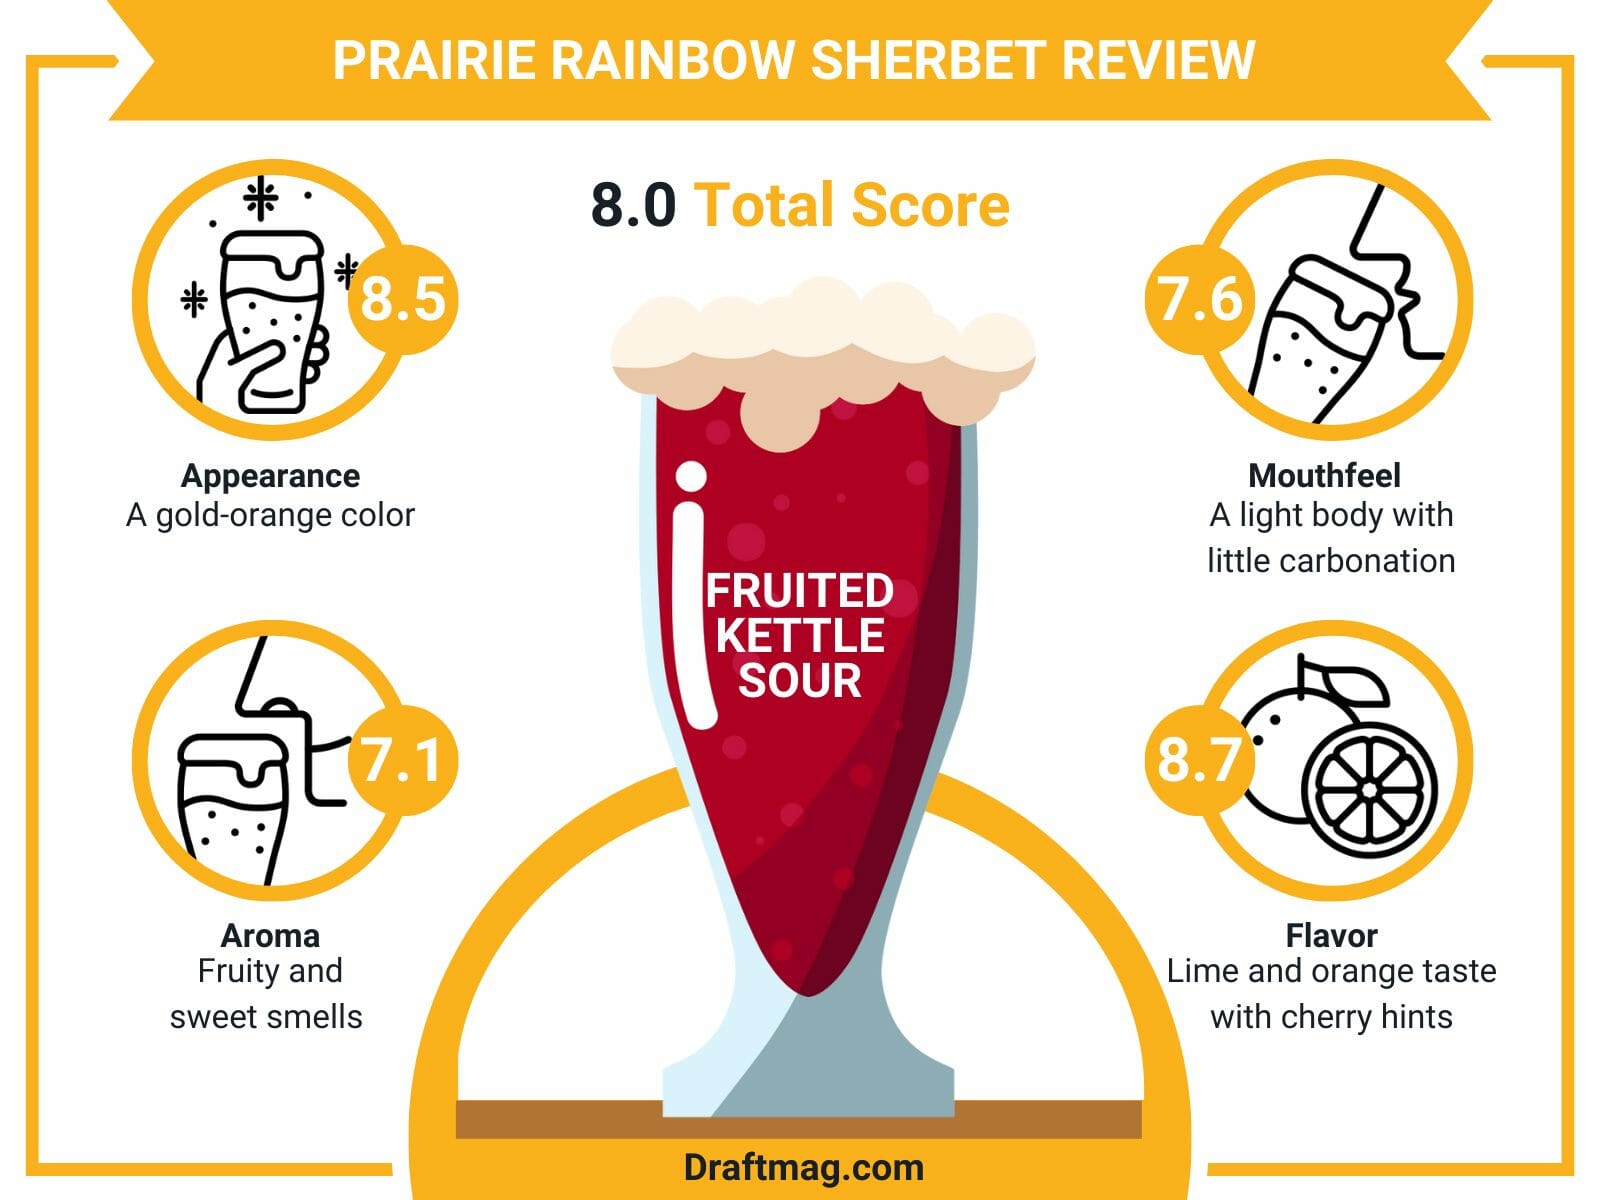 Prairie rainbow sherbet review infographic